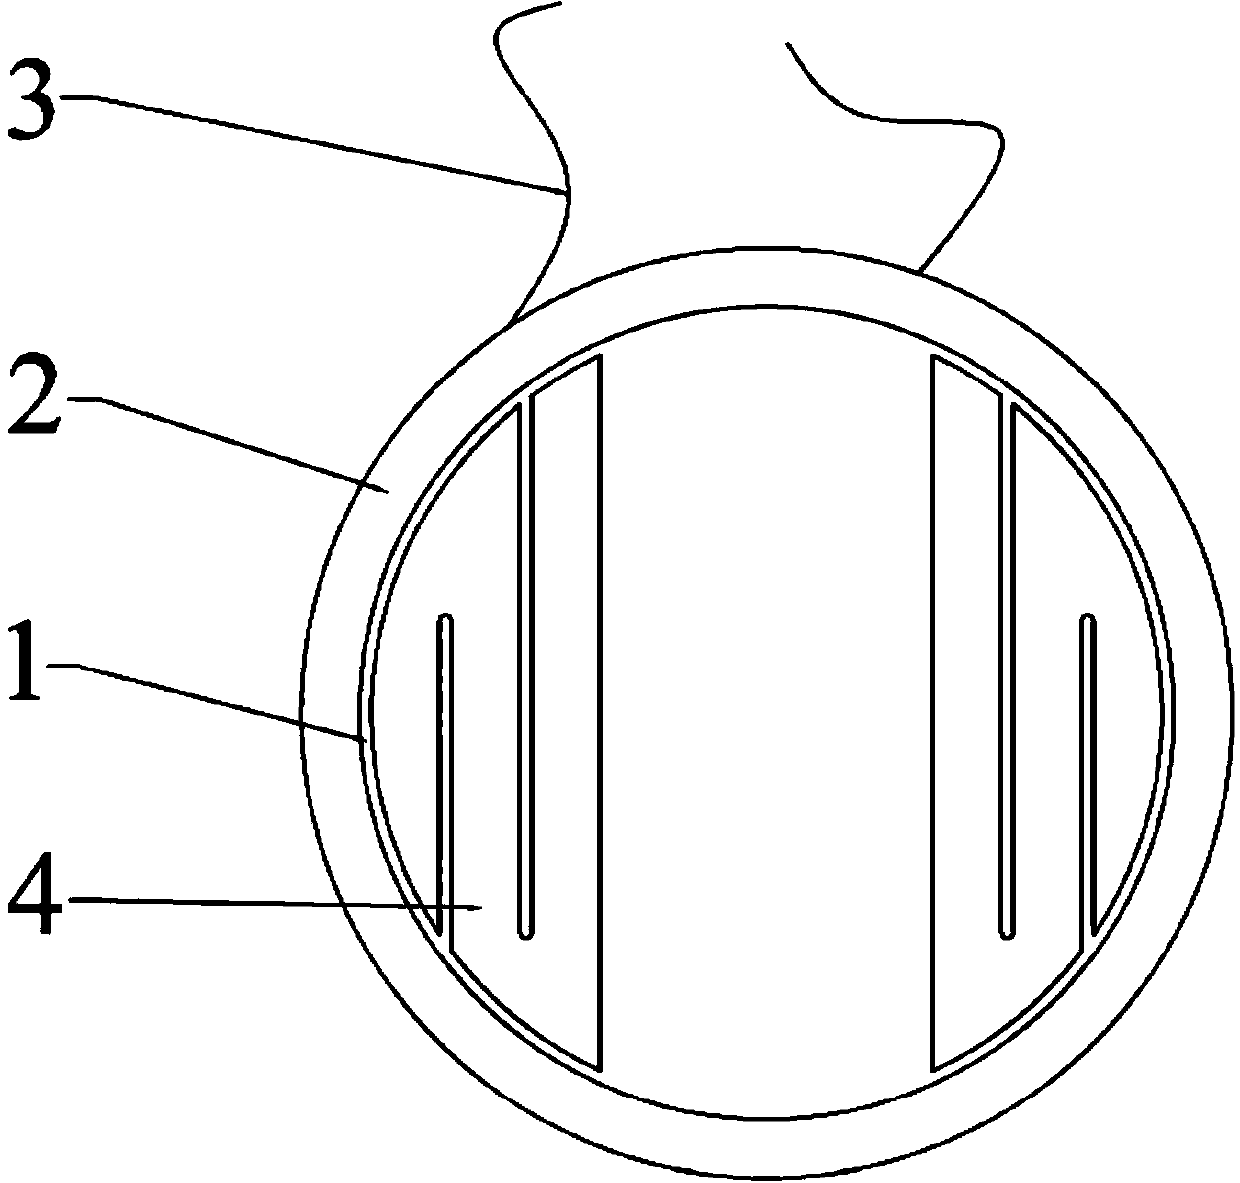 Planar loudspeaker composite vibrating diaphragm of and earphone loudspeaker with same